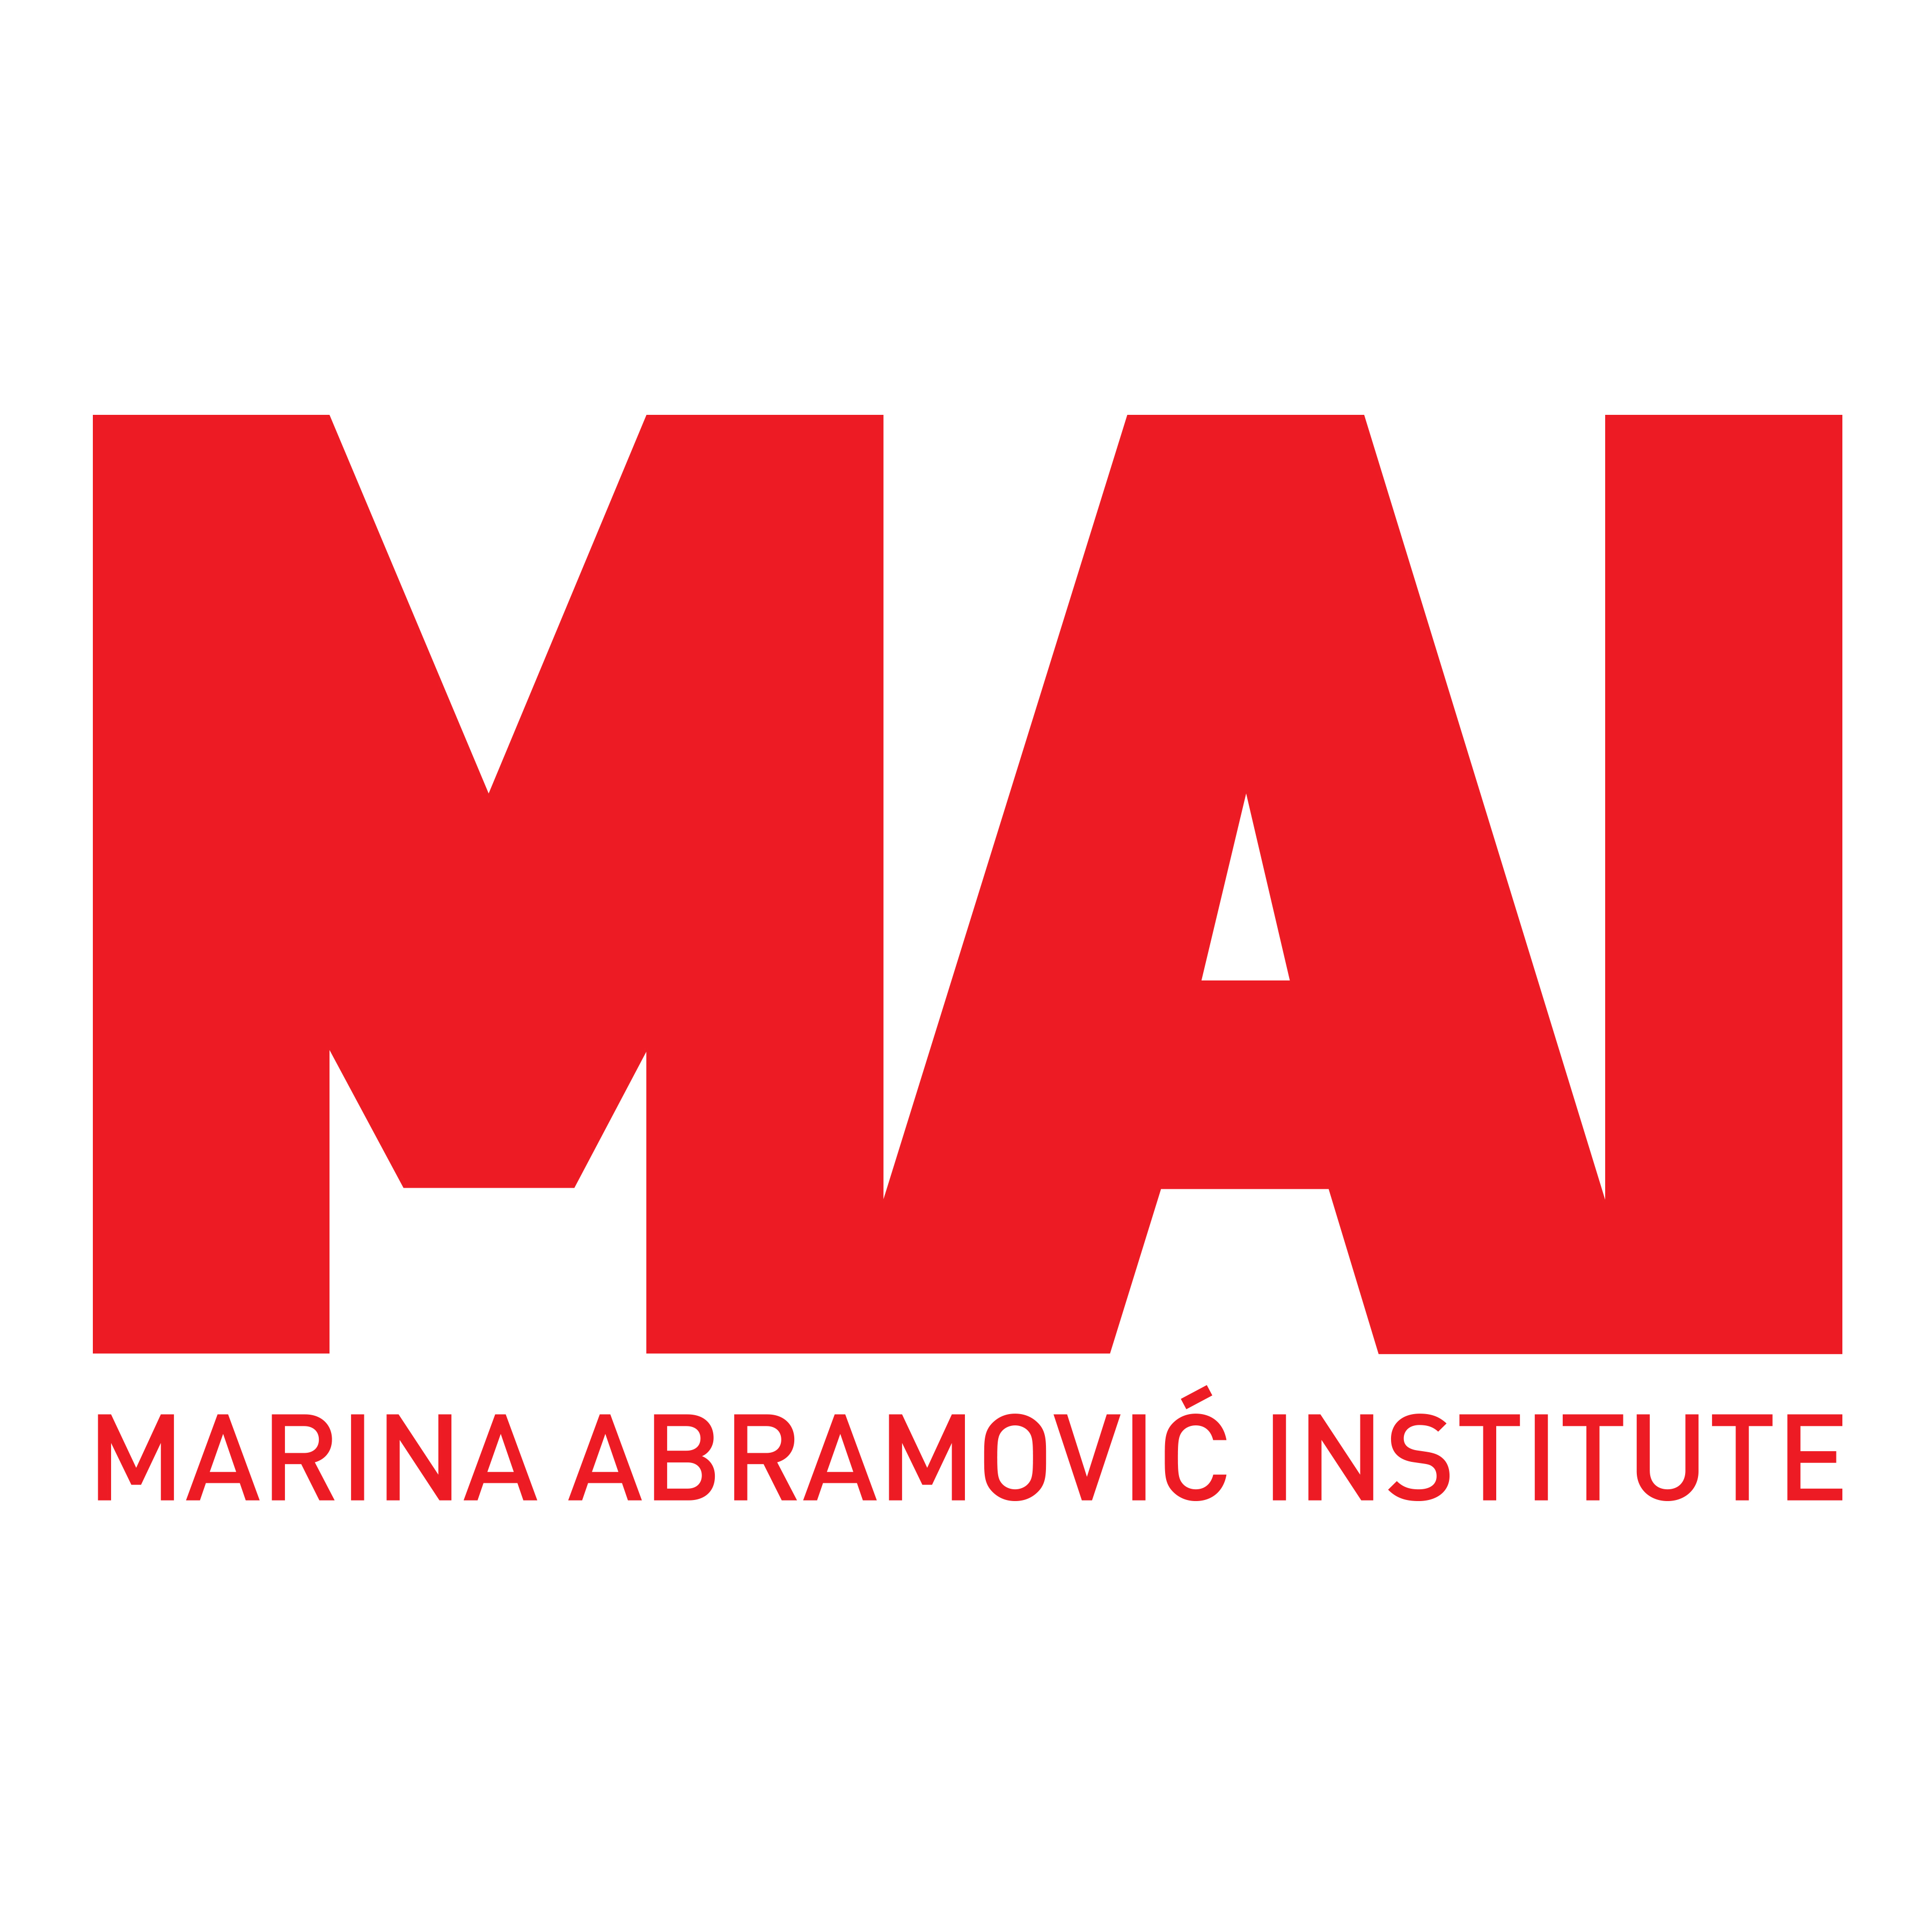 Marina Abramovic Institute